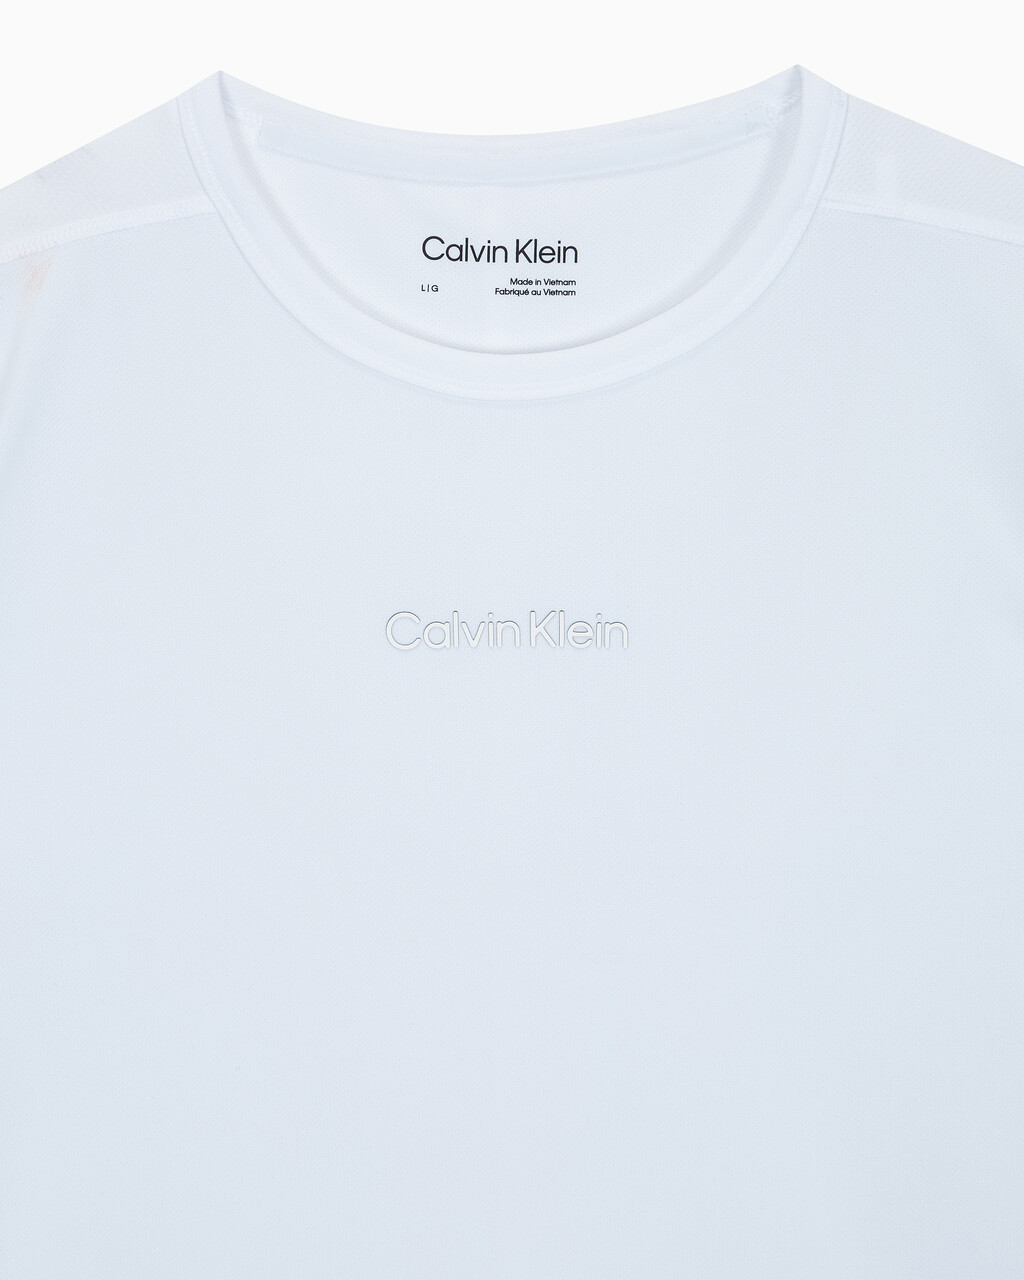 Buy 남성 레귤러 핏 숏슬리브 티셔츠 in color BRILLIANT WHITE